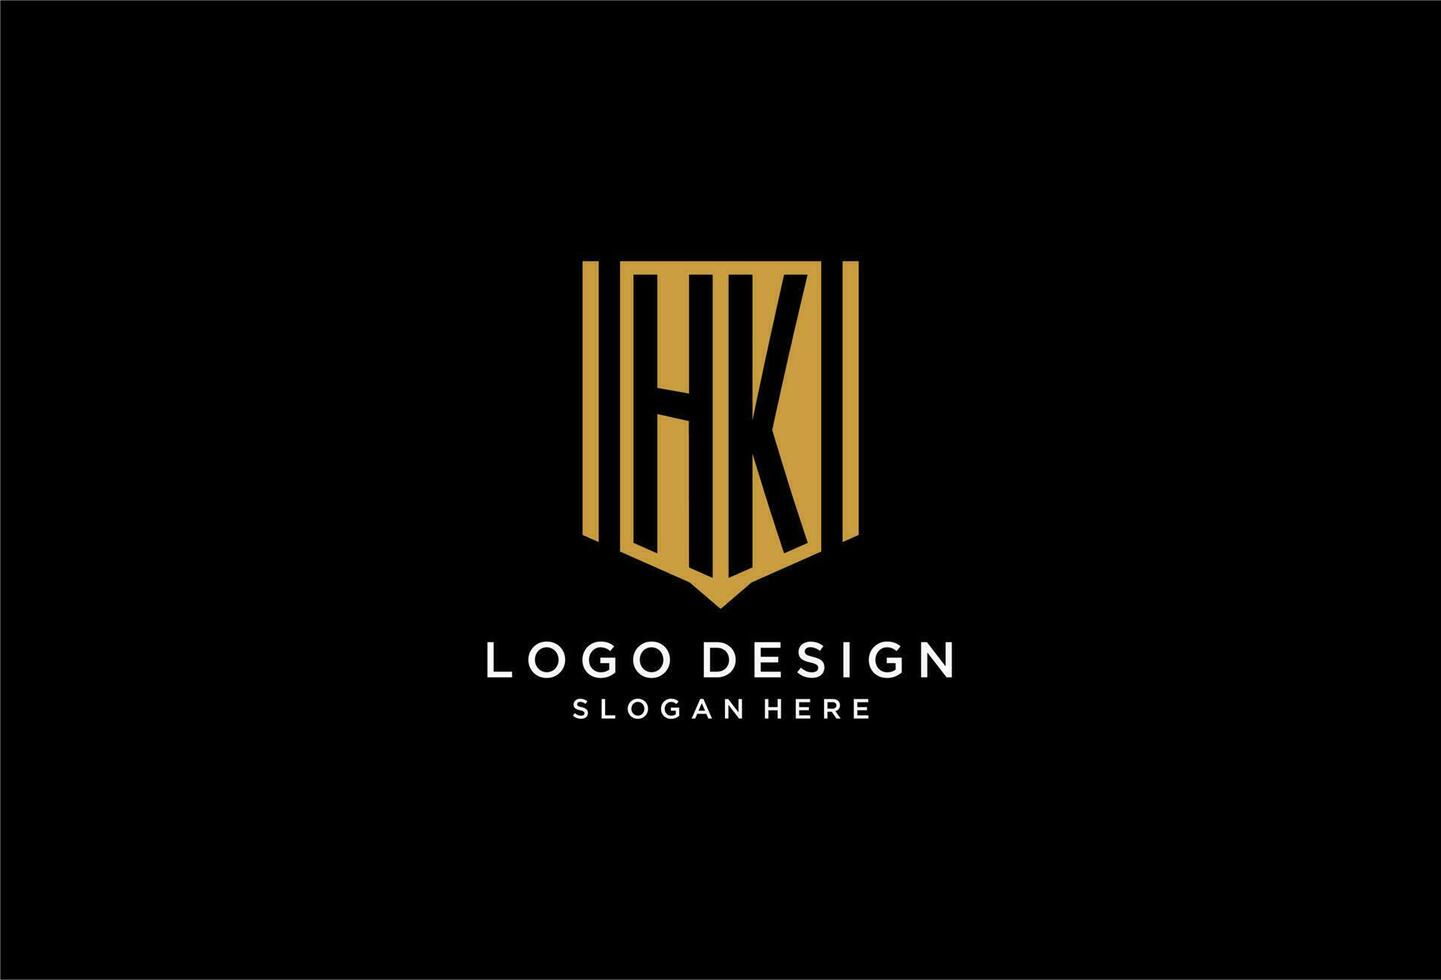 HK monogram logo with geometric shield icon design vector